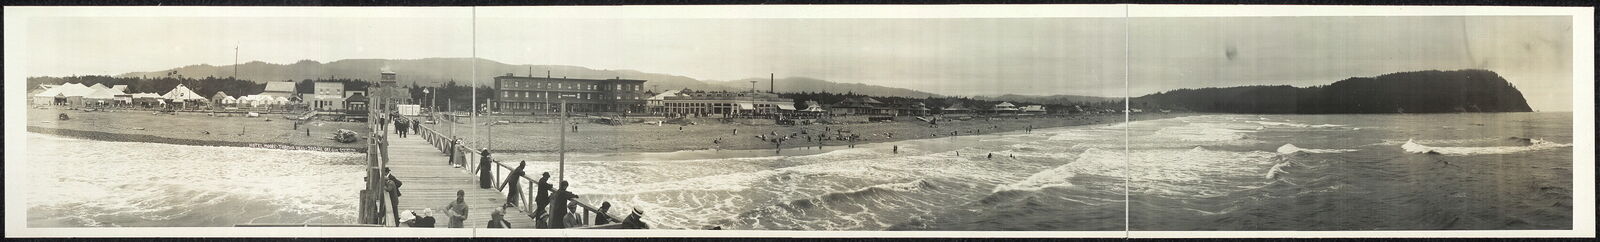 Photo:1914 Panoramic: Hotel Moore,Tillamook Head,Seaside,Oregon